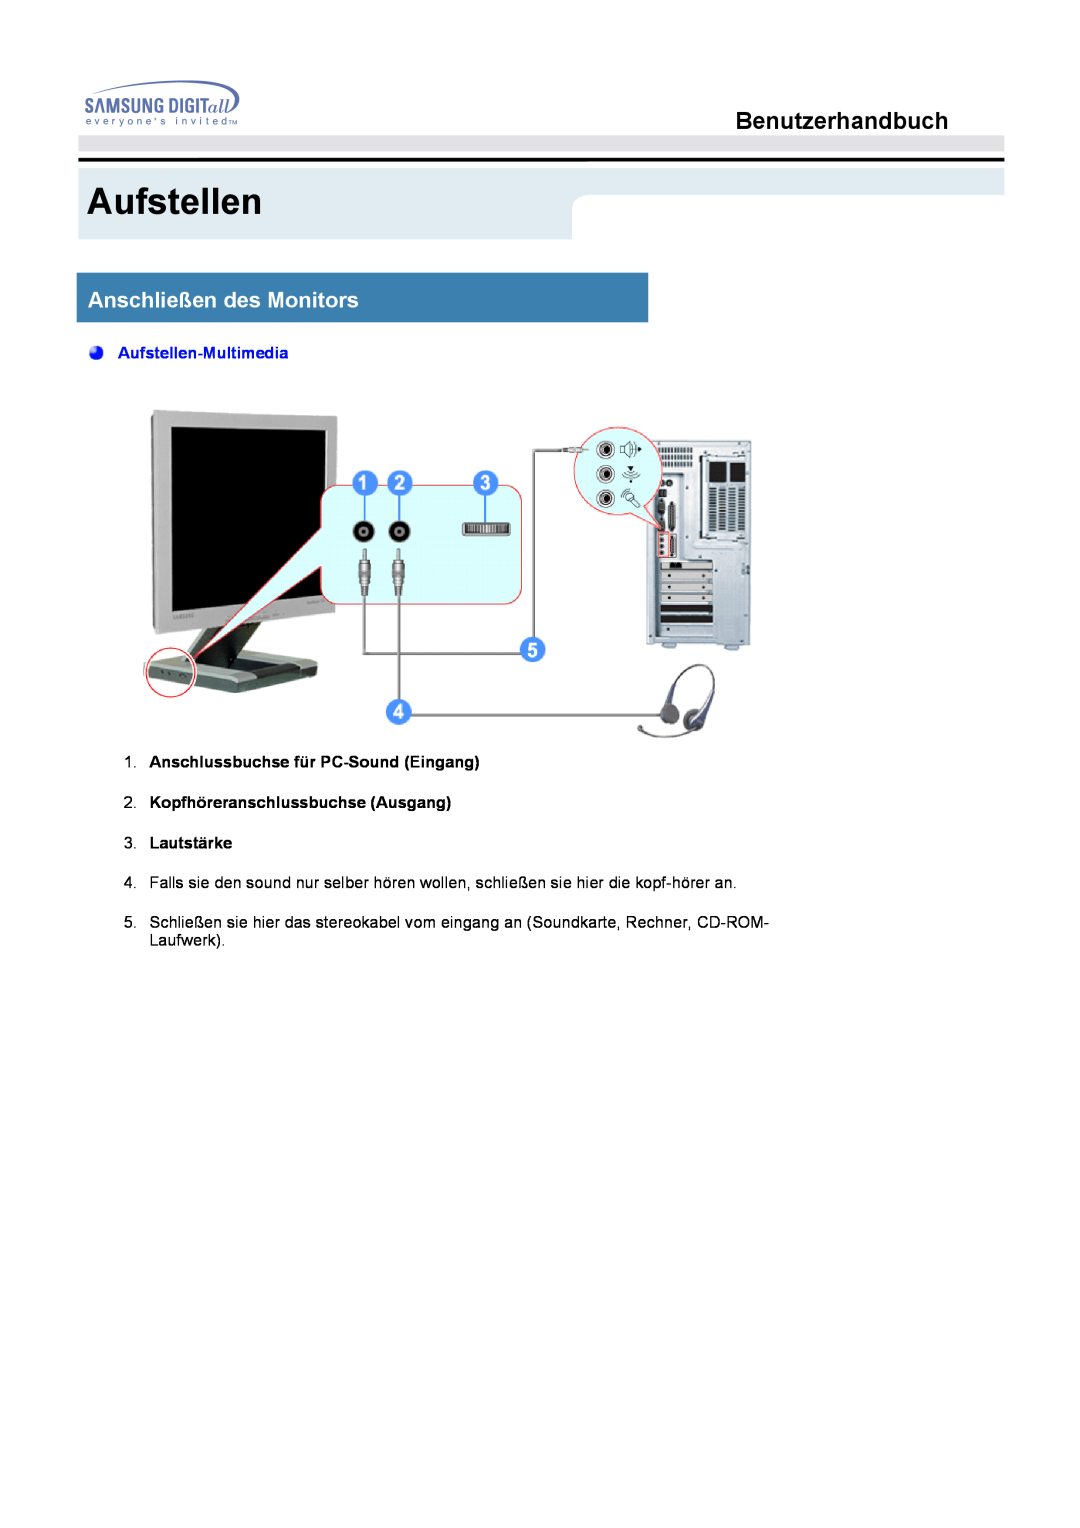 Samsung MO15ESZSZ/EDC, MO15ESDS/XEU, MO15ESDSZ/XTP Benutzerhandbuch, Anschließen des Monitors, Aufstellen-Multimedia 